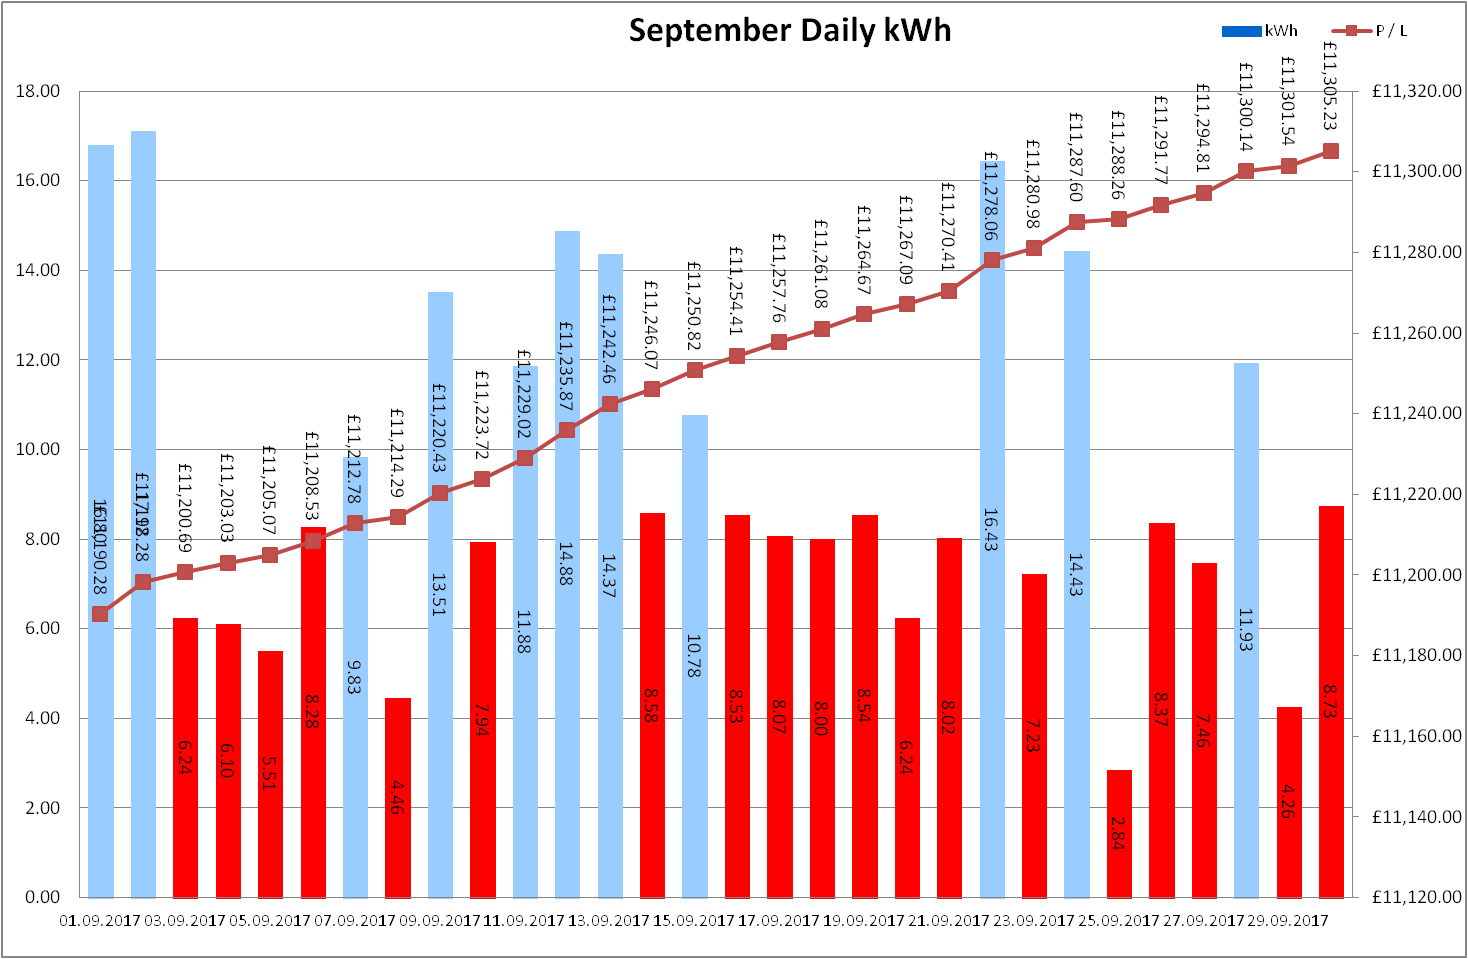 Total Output for September 2017